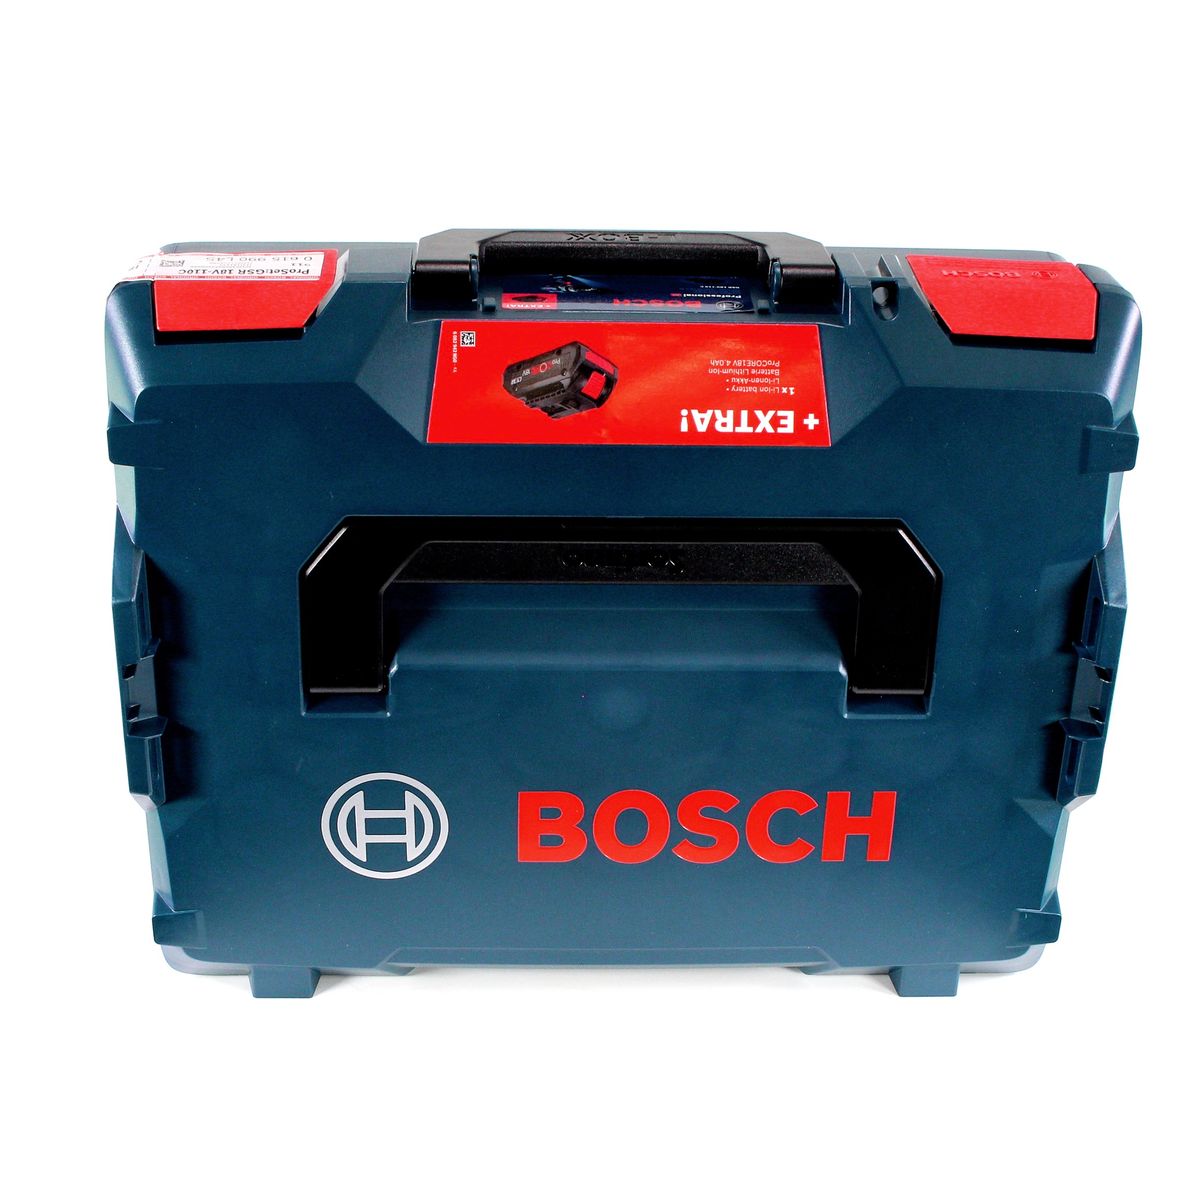 Bosch GSR 18V-110 C Akku Bohrschrauber 18V 110Nm Brushless + 2x Akku 5,0Ah + Ladegerät + L-Boxx - Toolbrothers